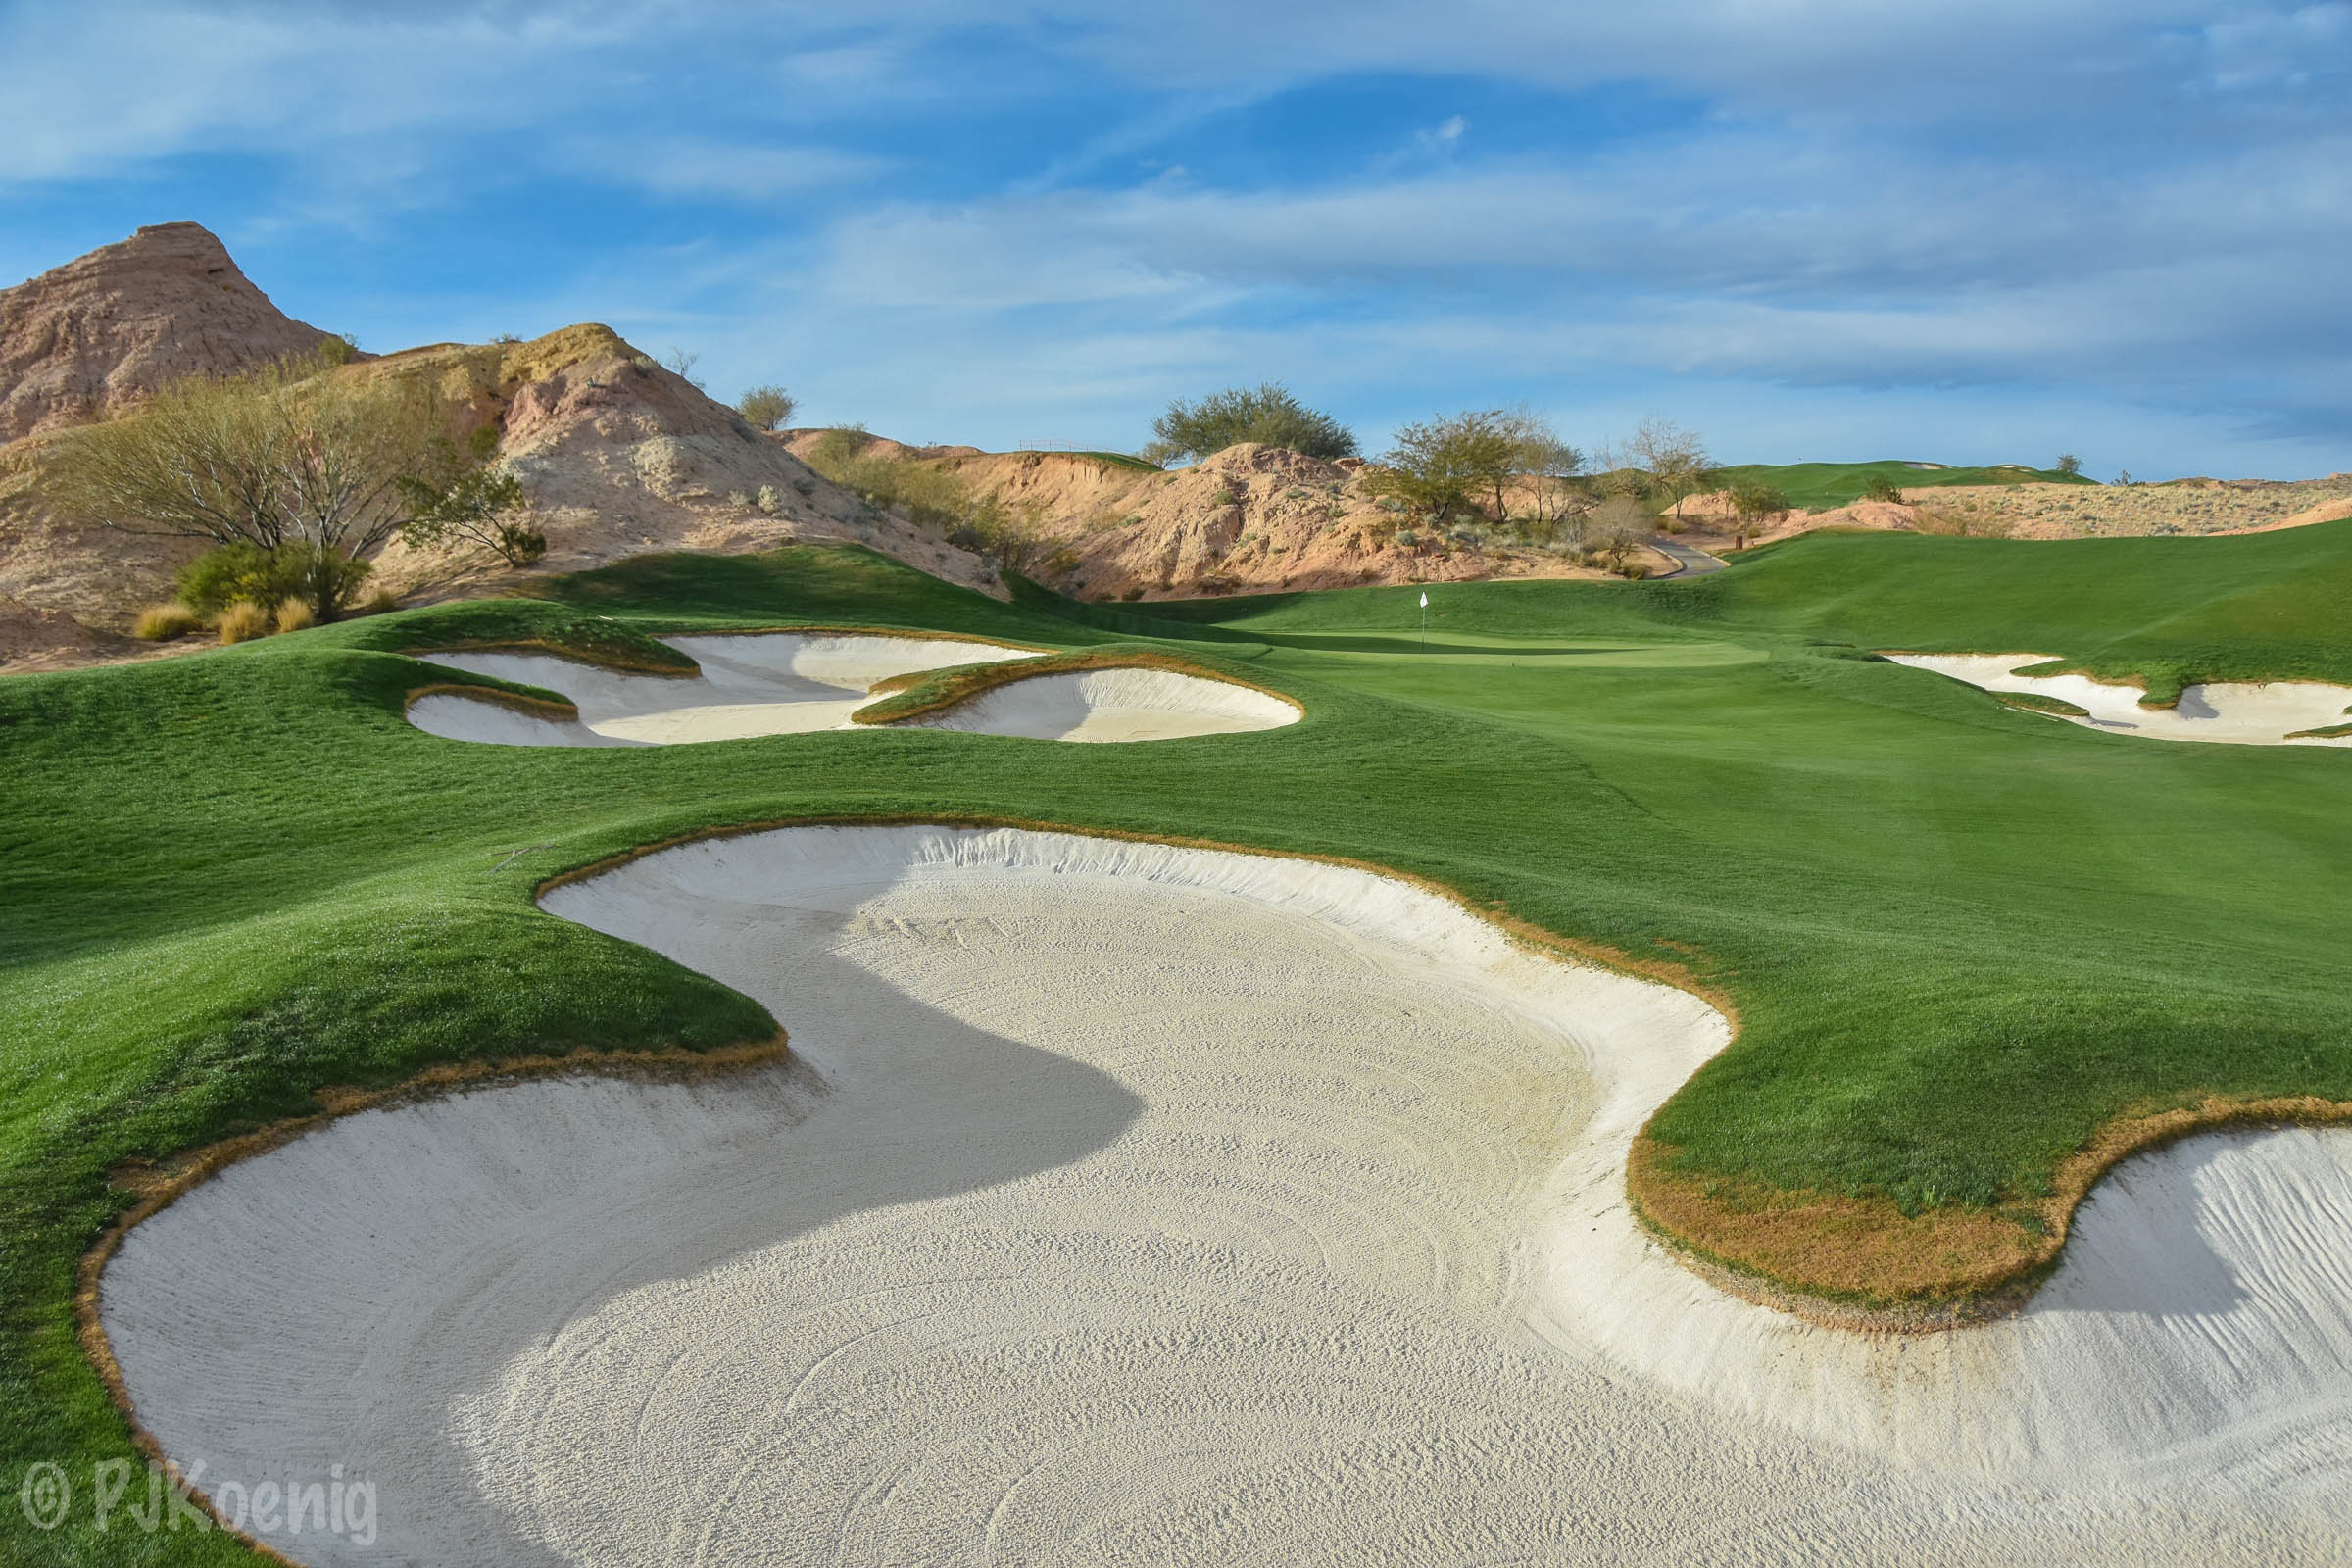 Golf Digest America's Top 100 Public Courses — PJKoenig Golf